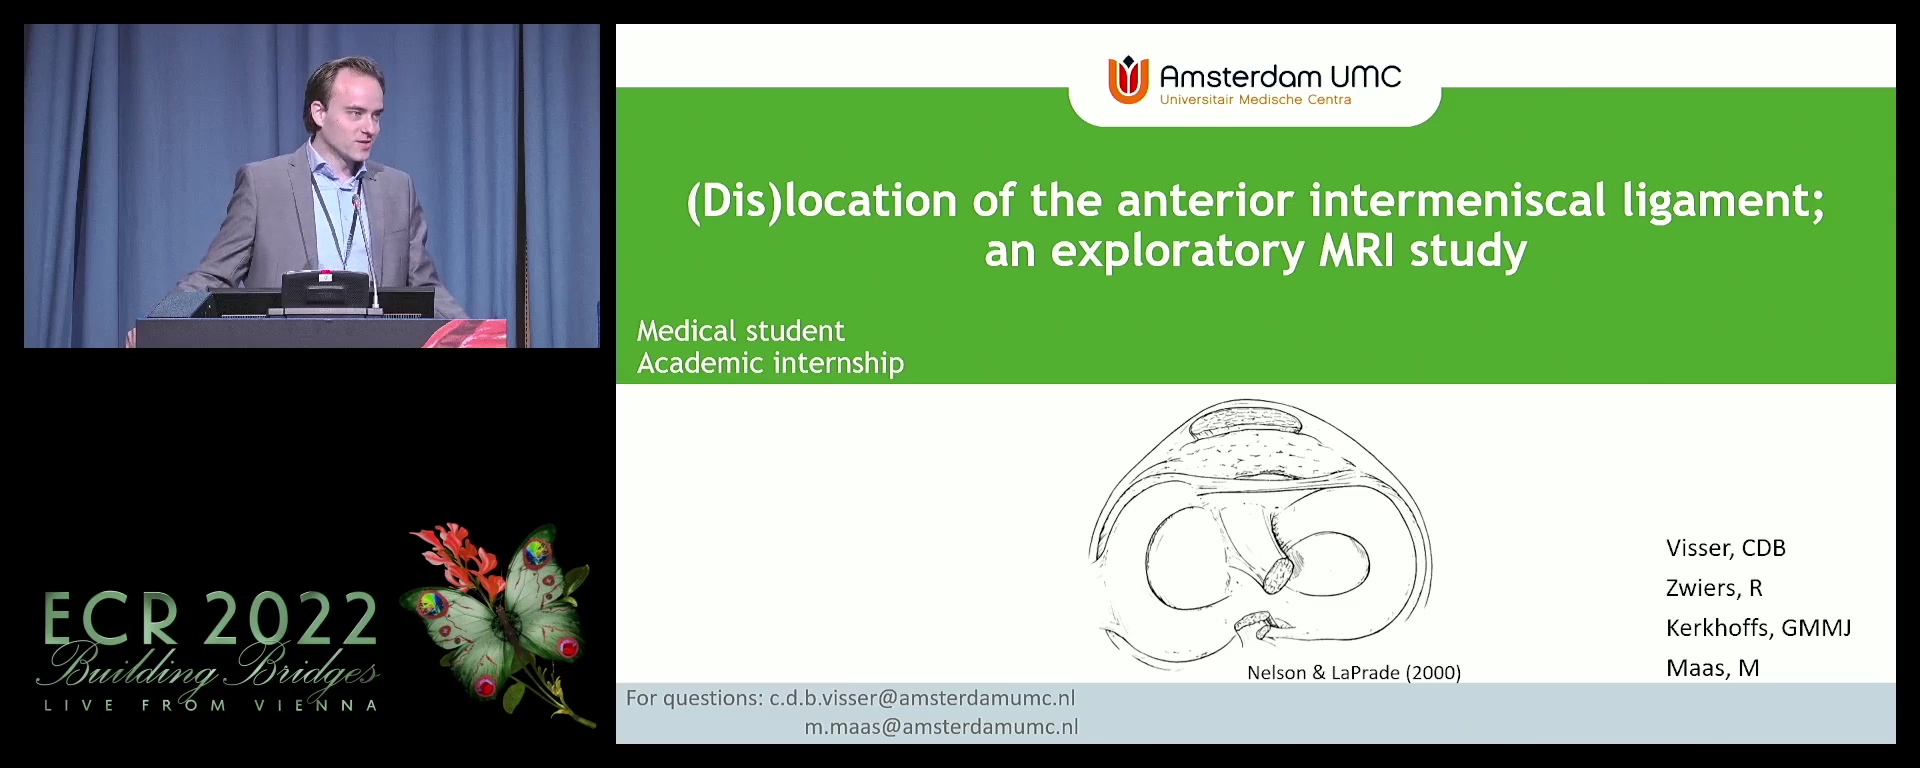 (Dis)location of the anterior intermeniscal ligament: an exploratory MRI study